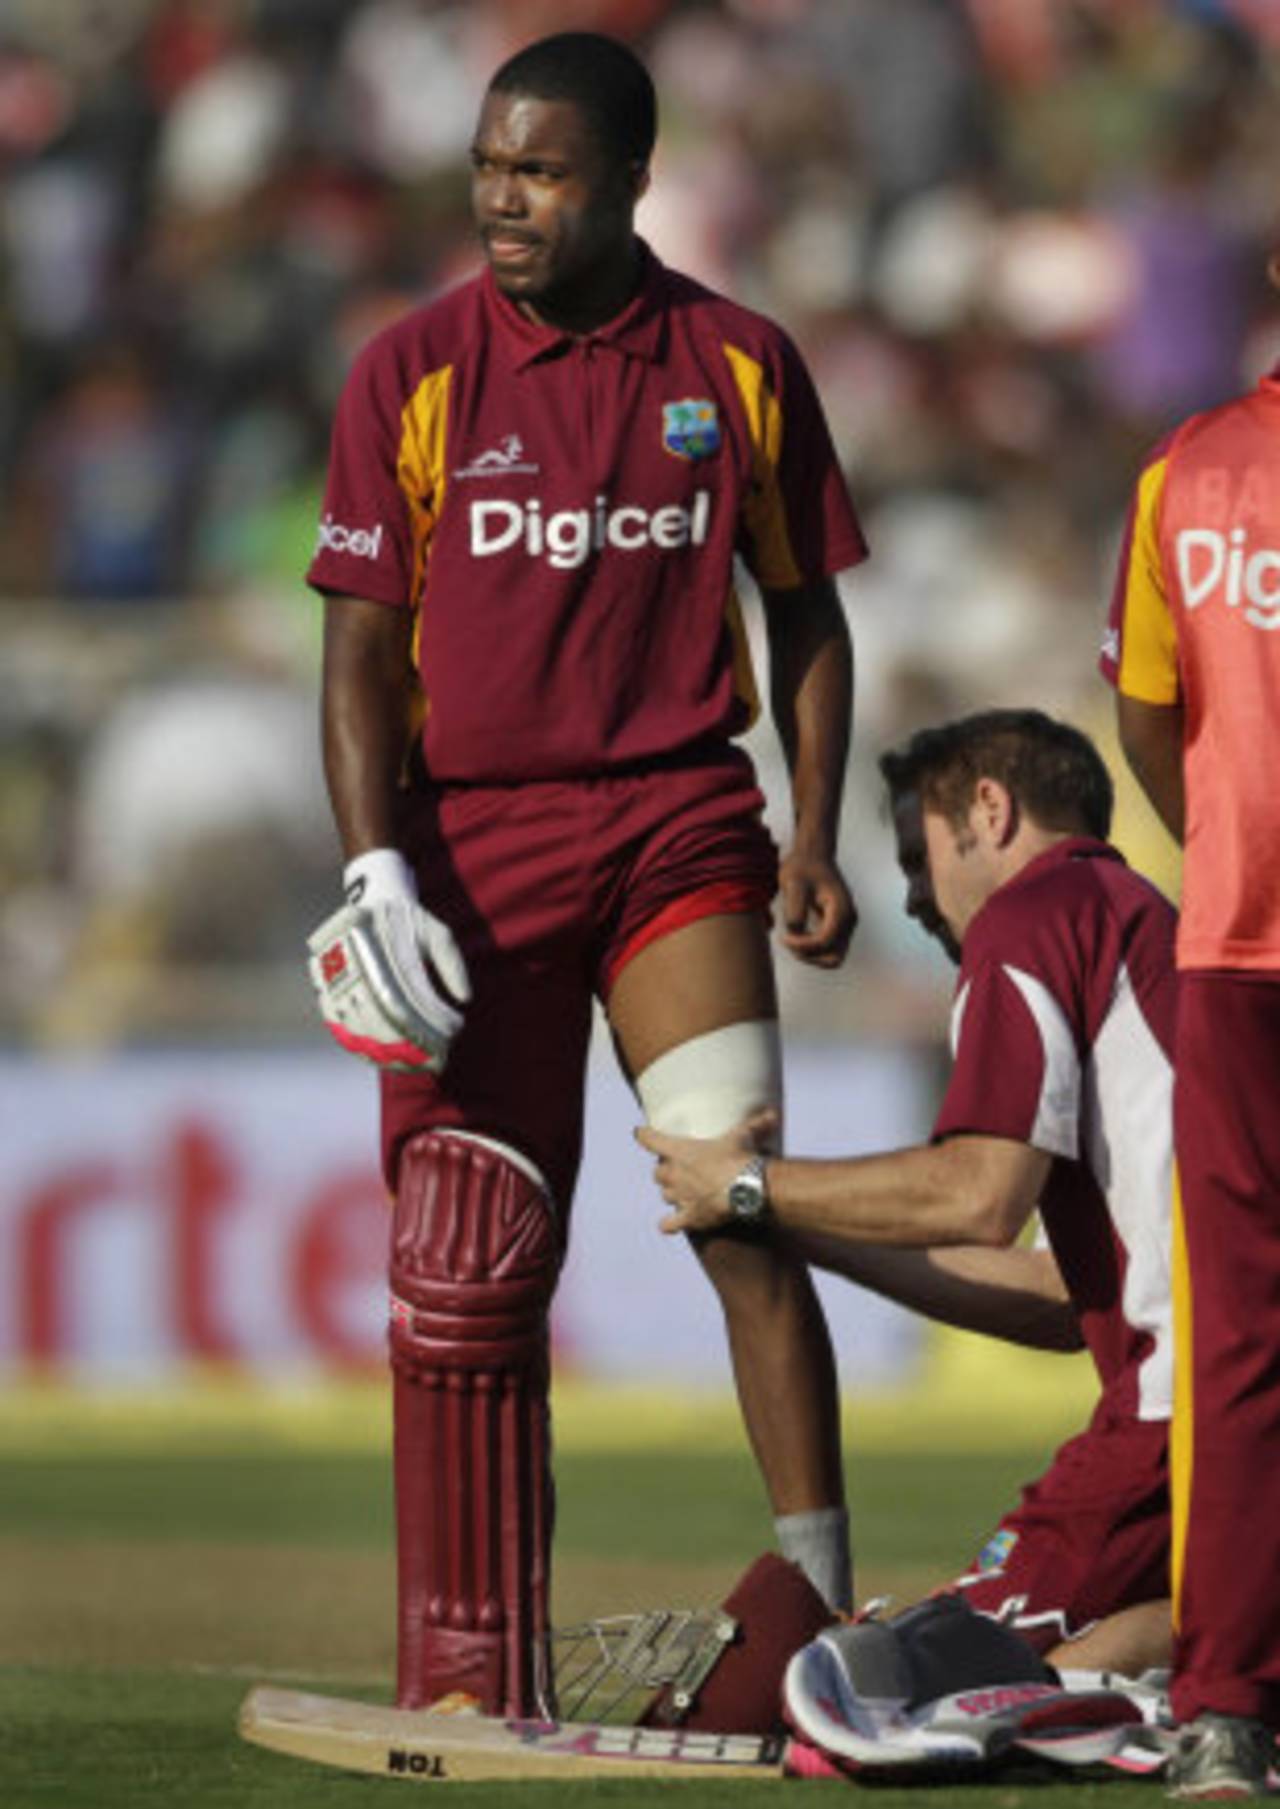 Darren Bravo has treatment on his left hamstring, India v West Indies, 3rd ODI, Ahmedabad, December 5, 2011